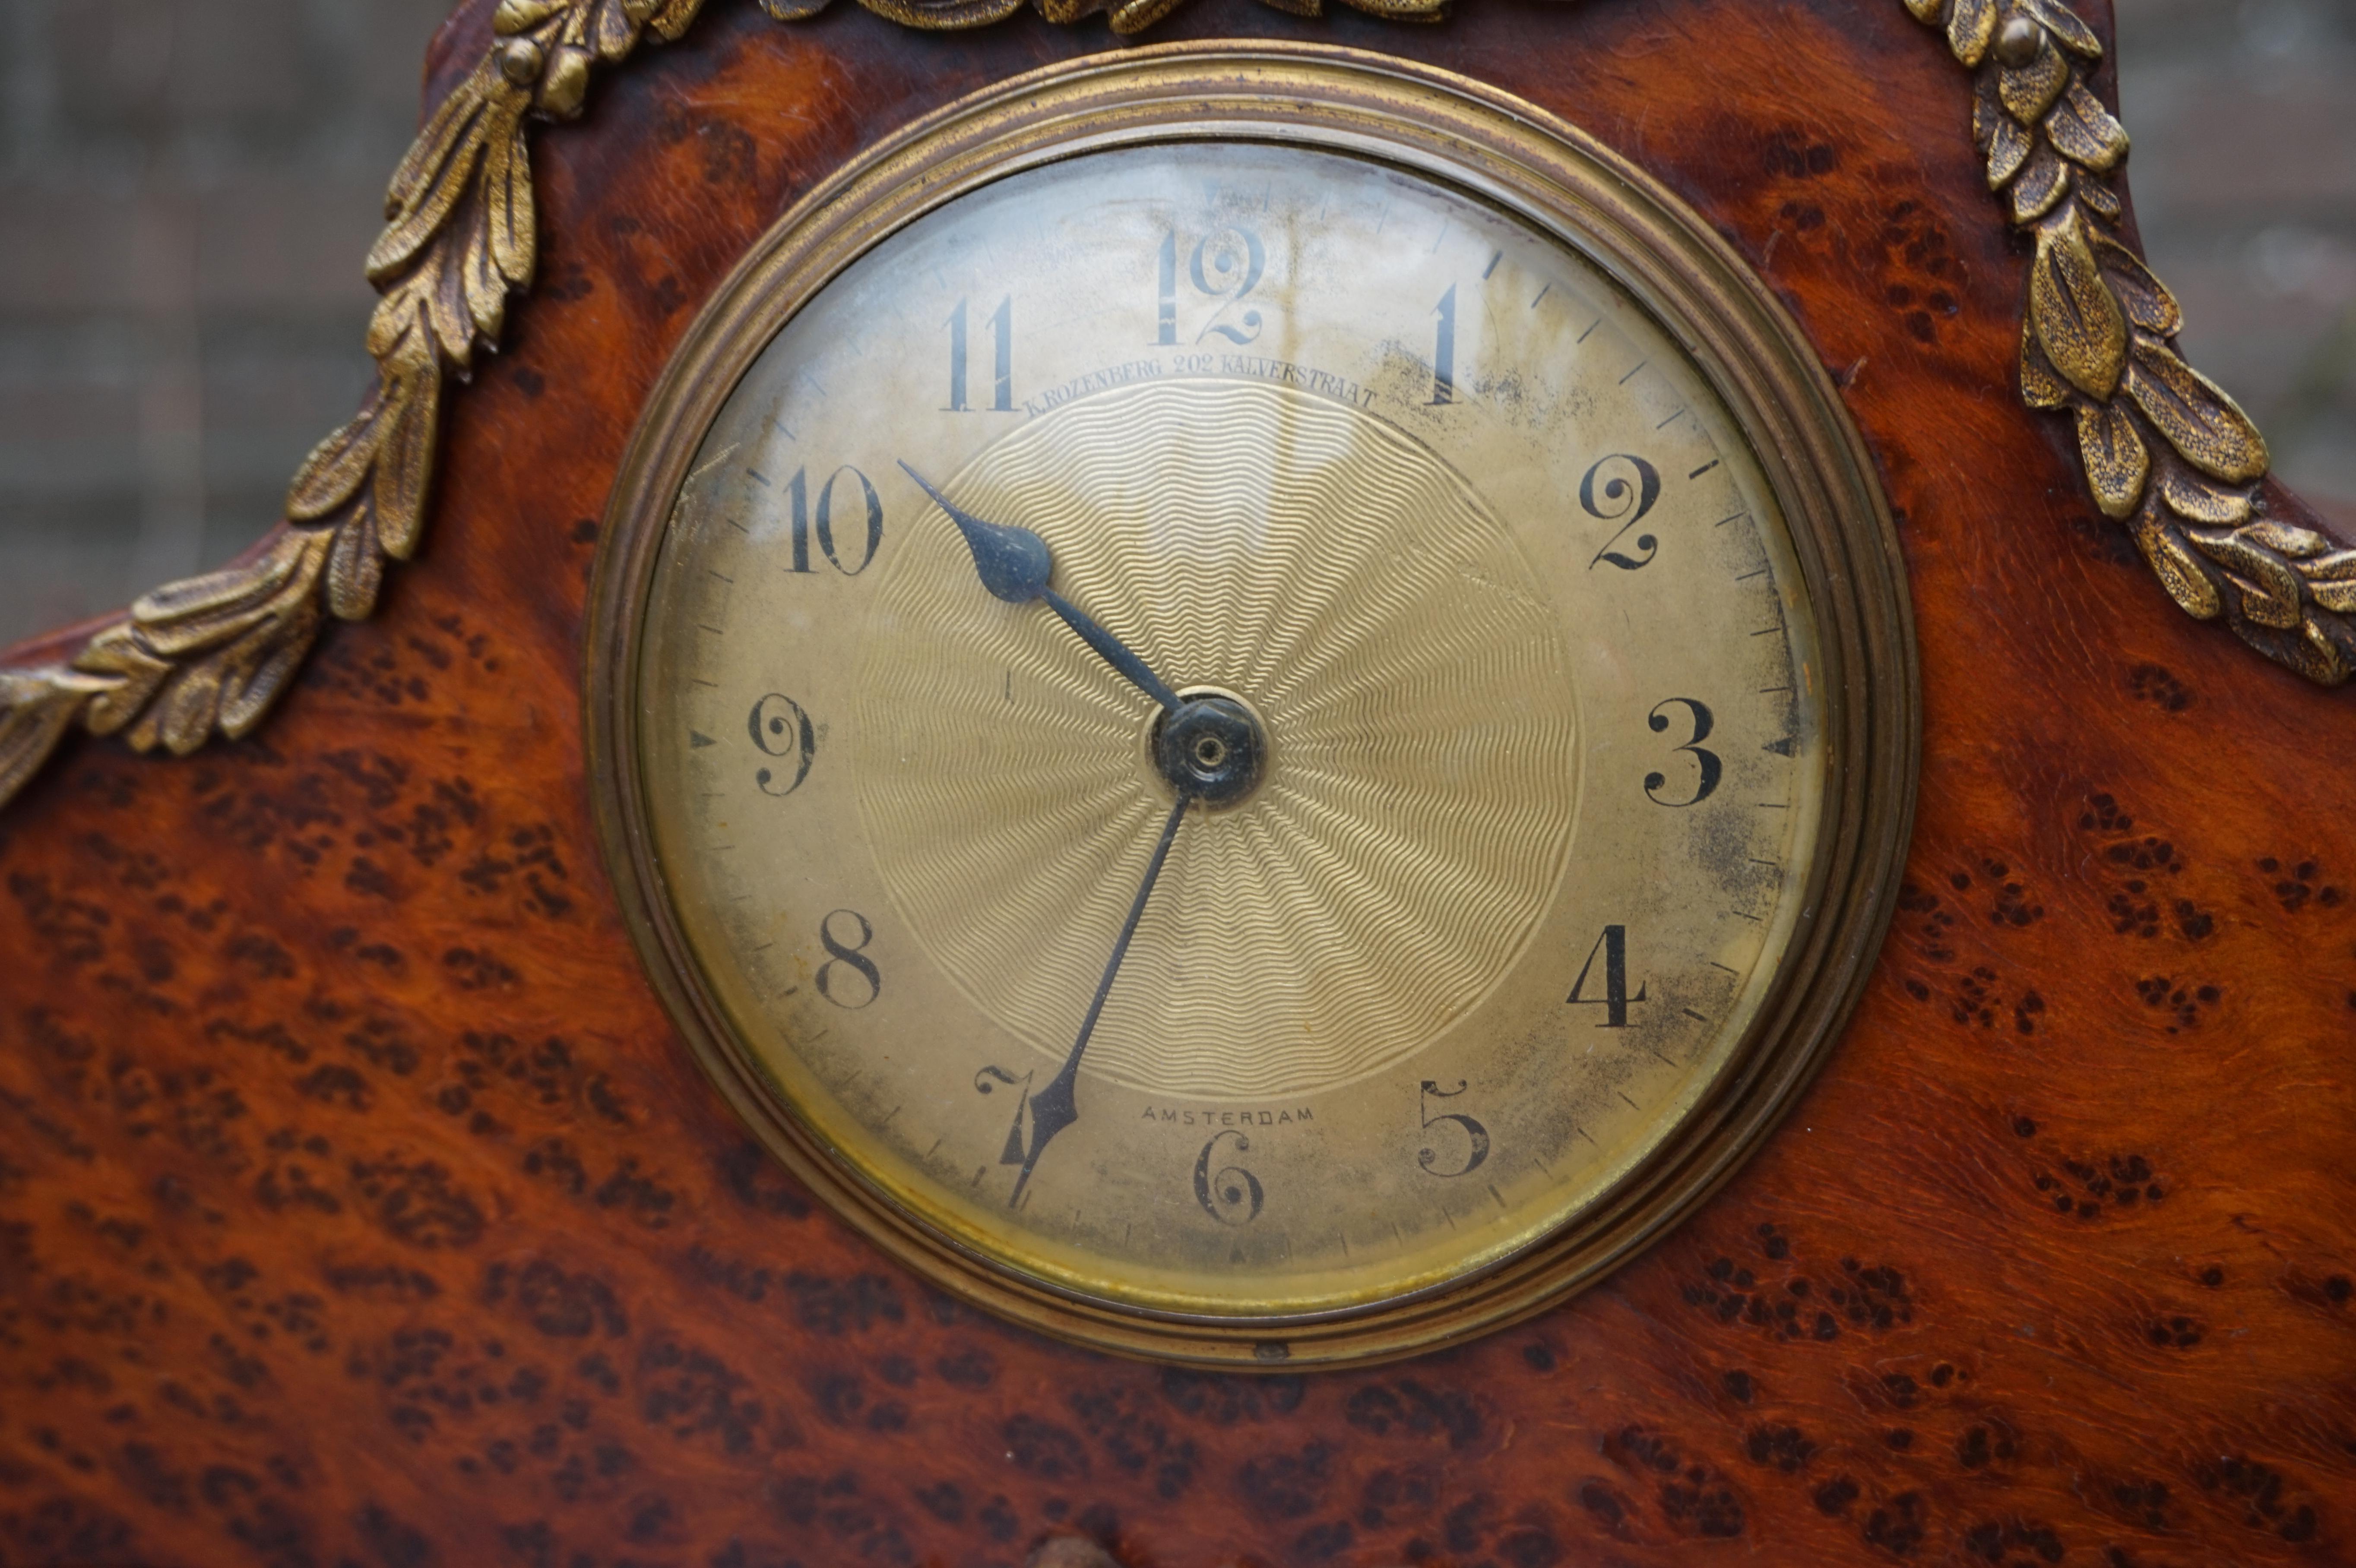 20th Century Stunning Burl Walnut Table or Mantel Clock with Stylish Bronze Feet & Ornaments